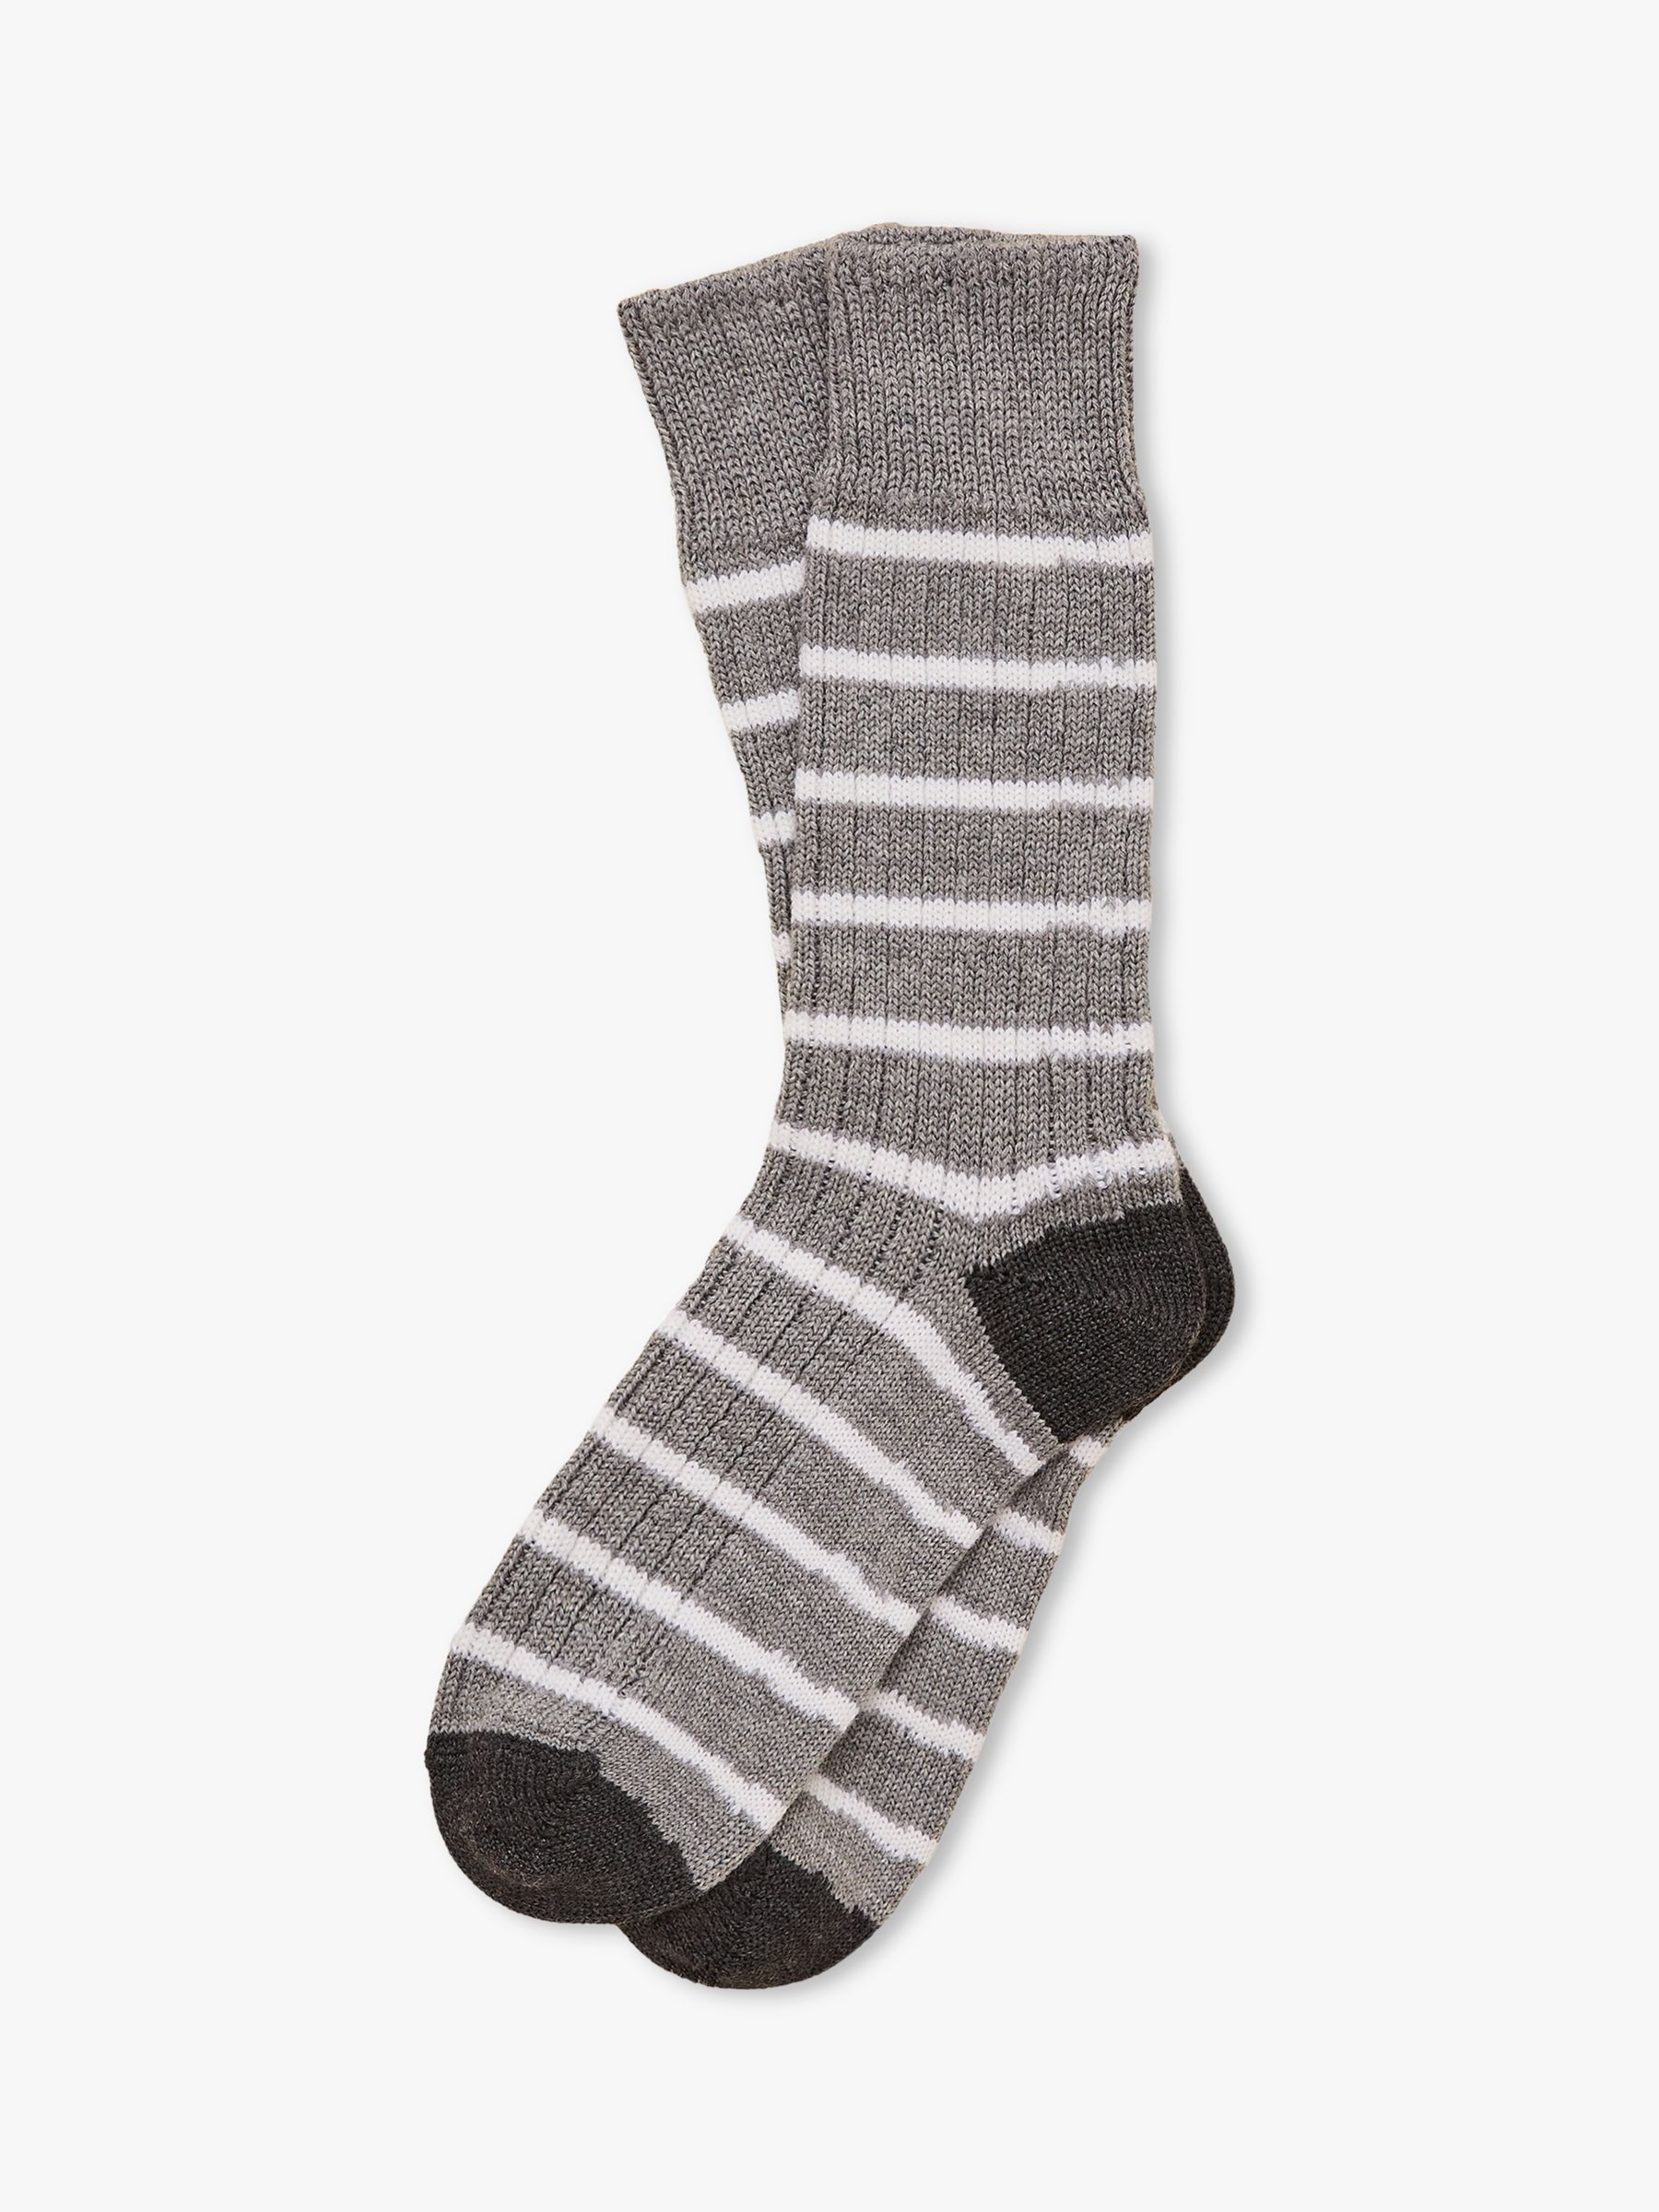 Celtic & Co. Merino Wool Rich Stripe Ankle Socks, Silver Grey/White at ...